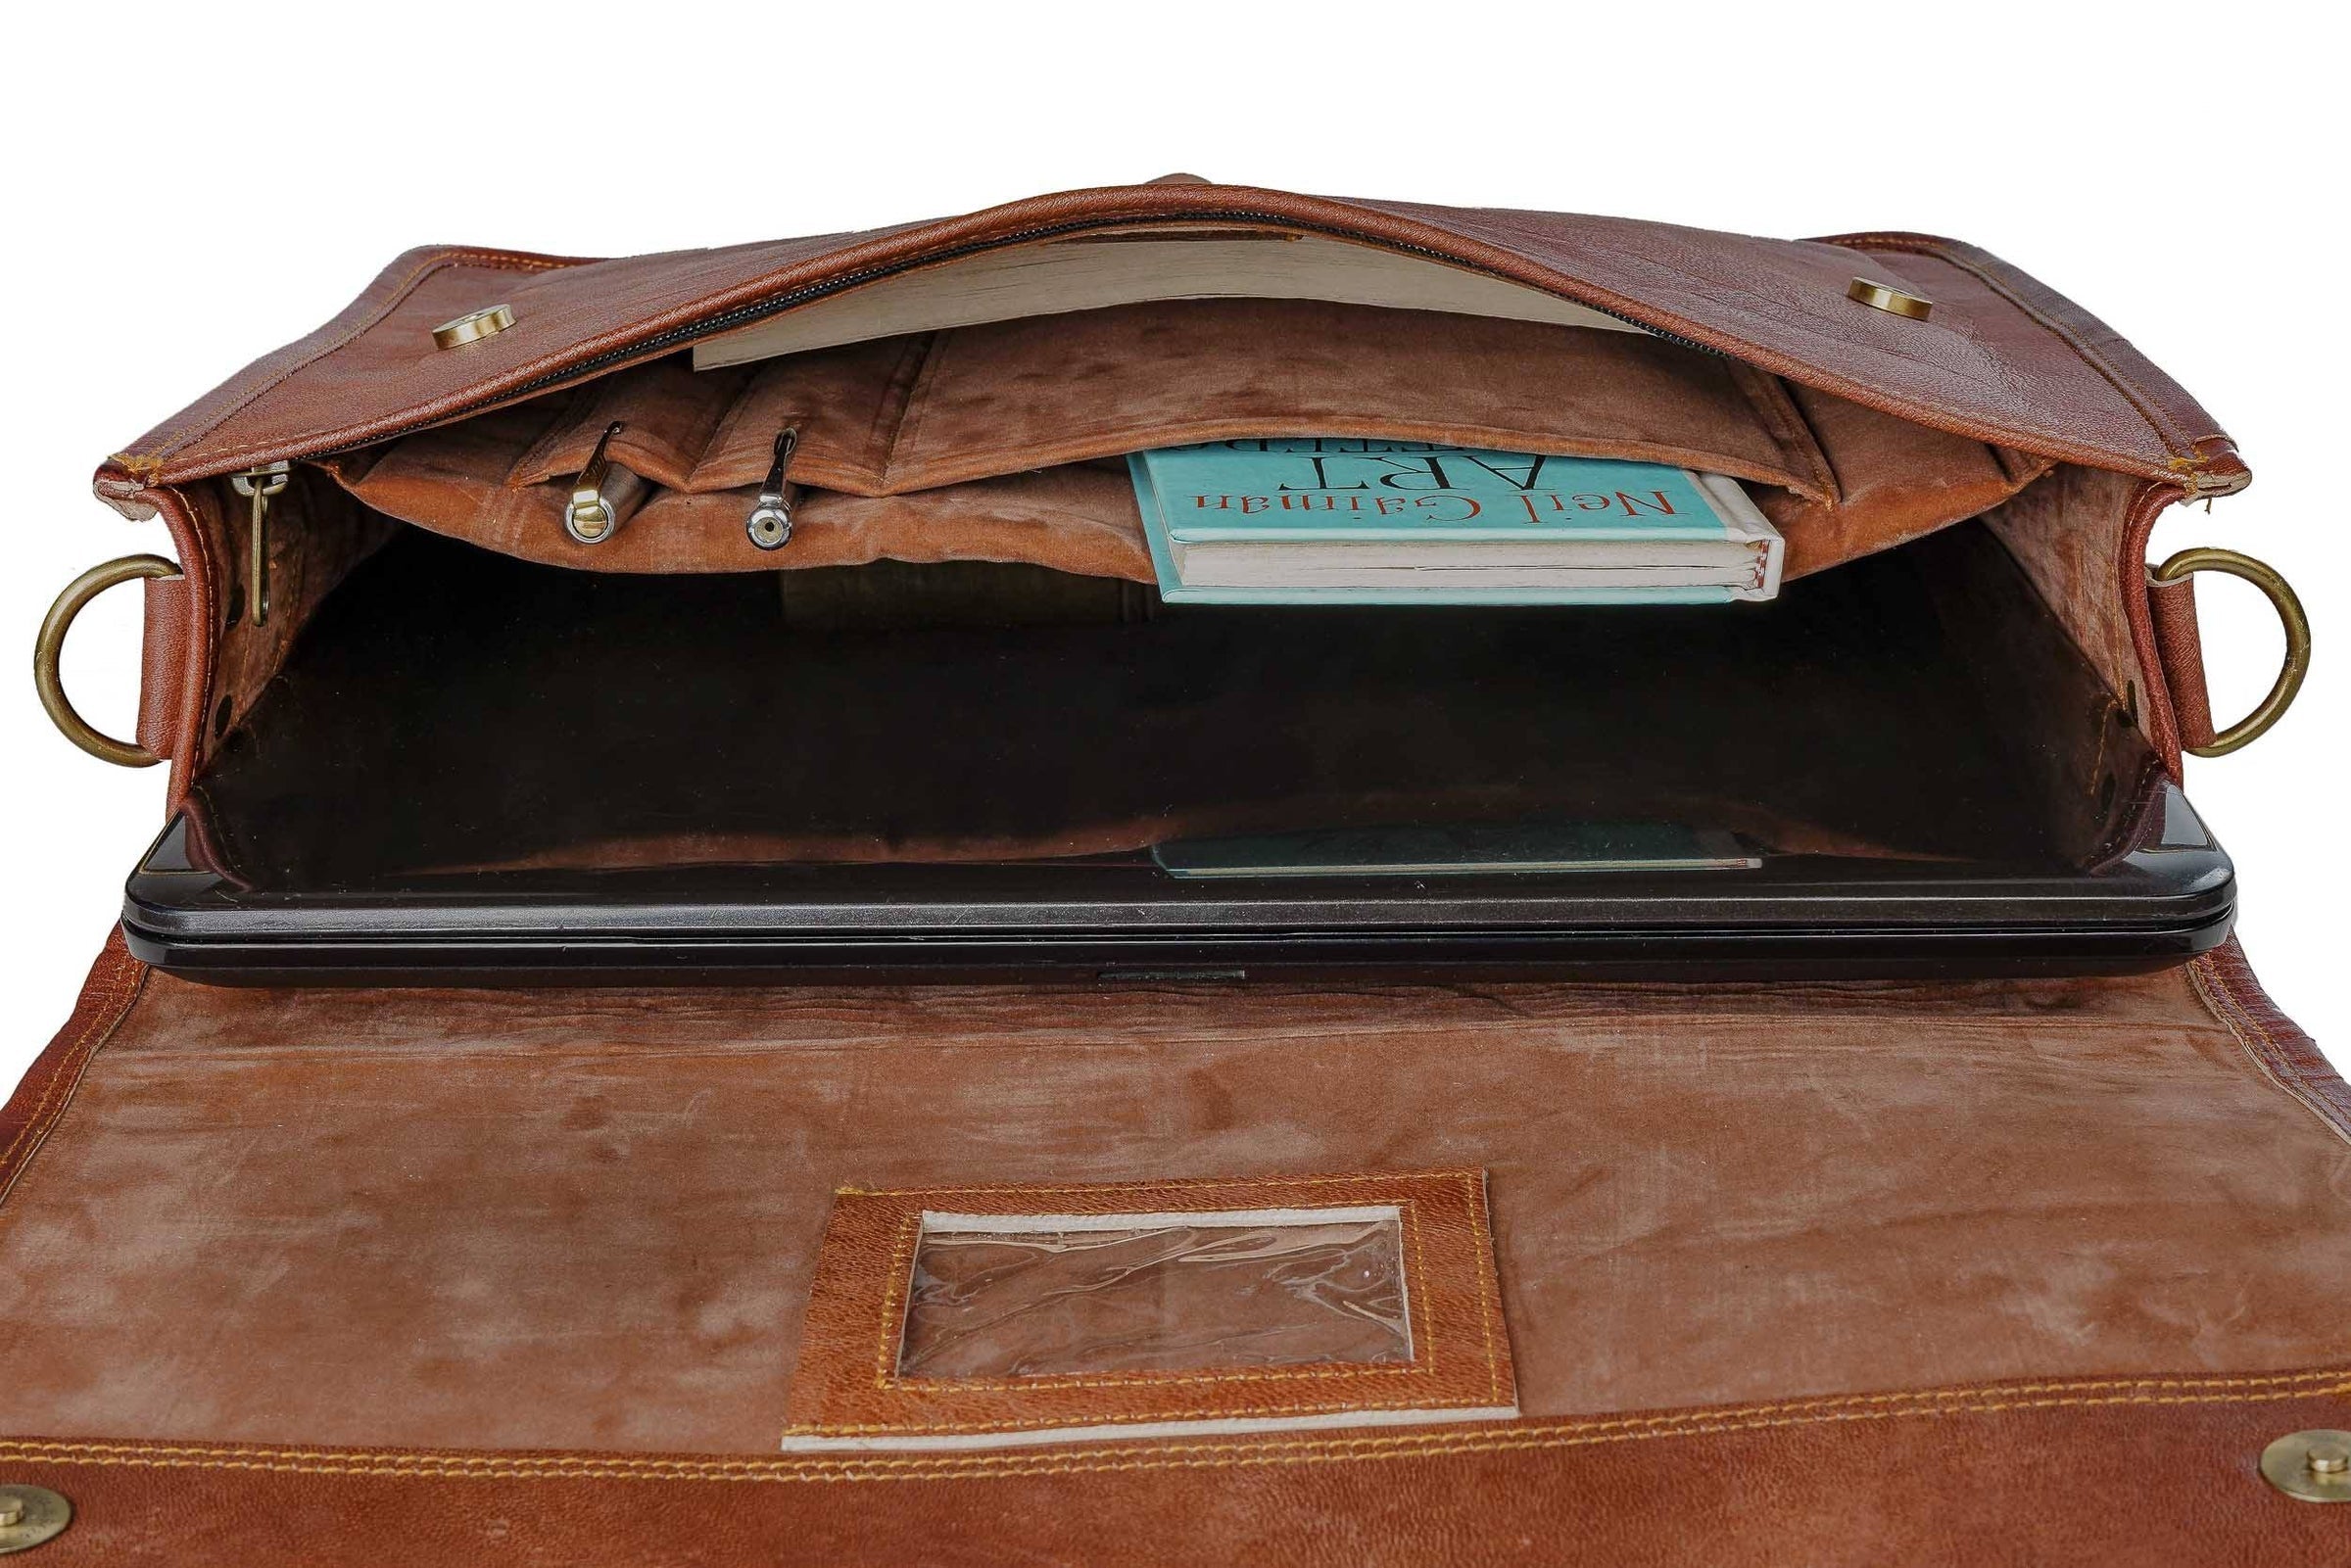 leather messenger bag inside view